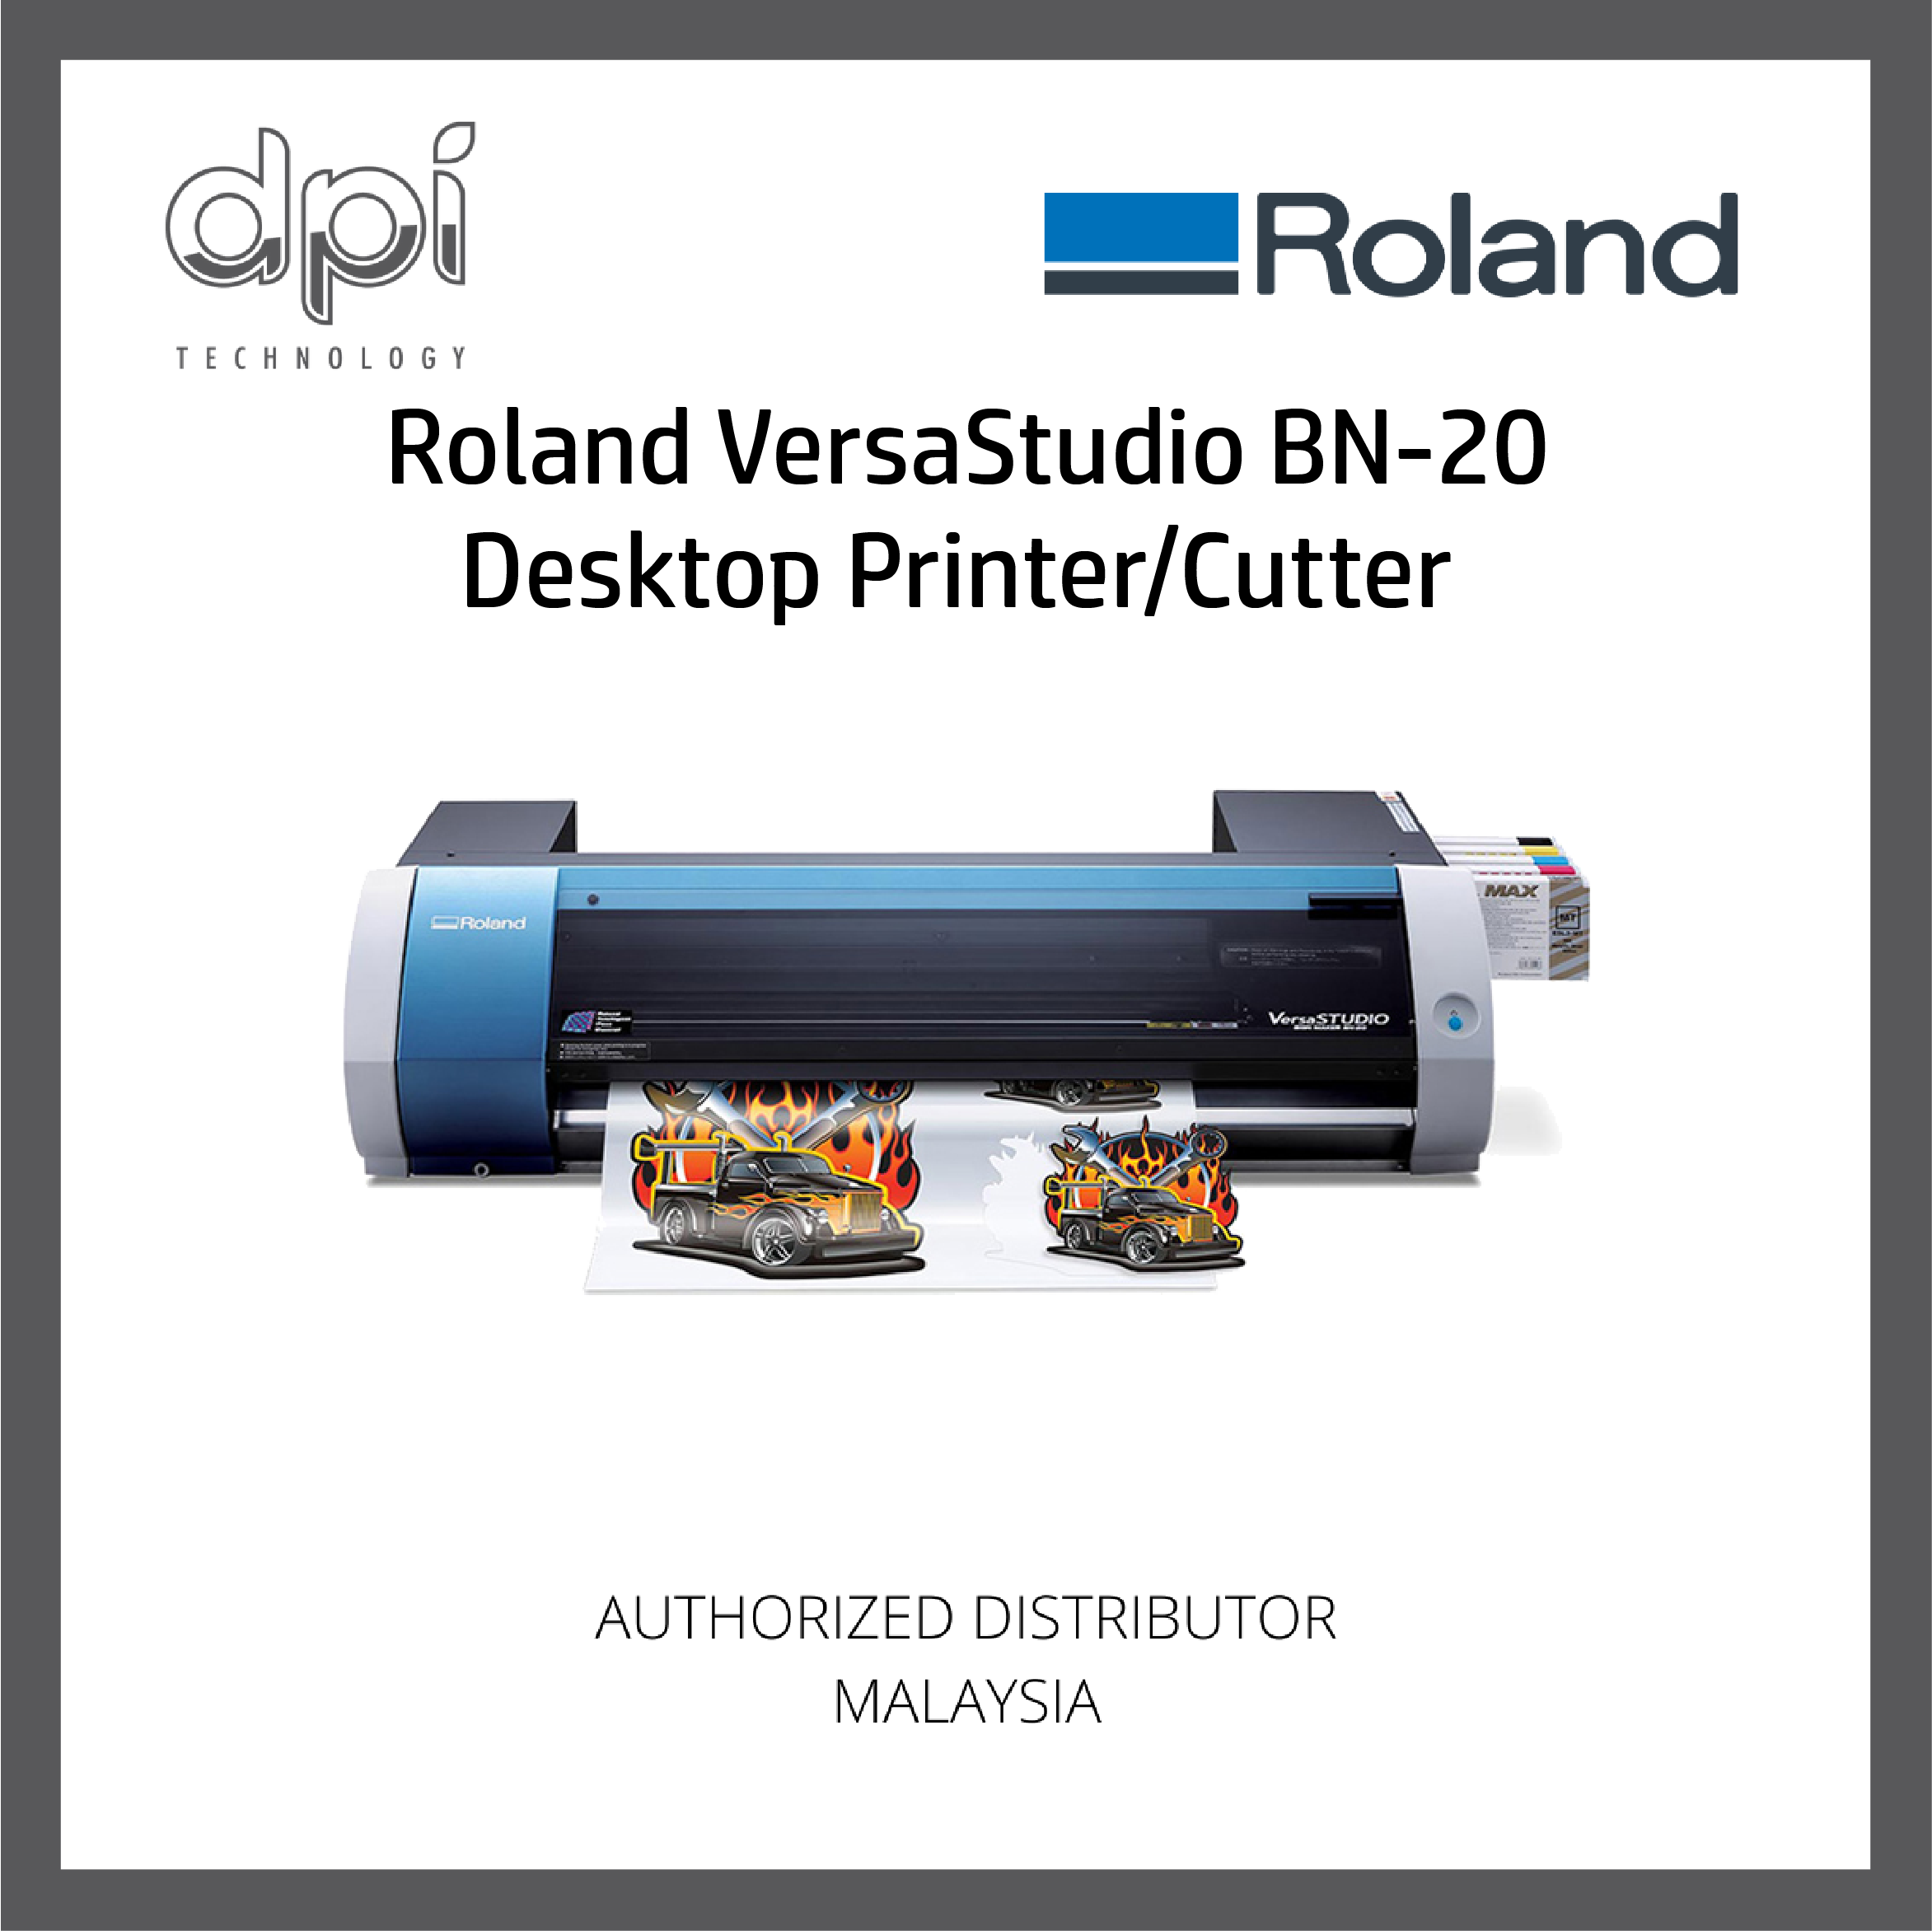 Roland VersaStudio BN-20 Desktop Printer/Cutter